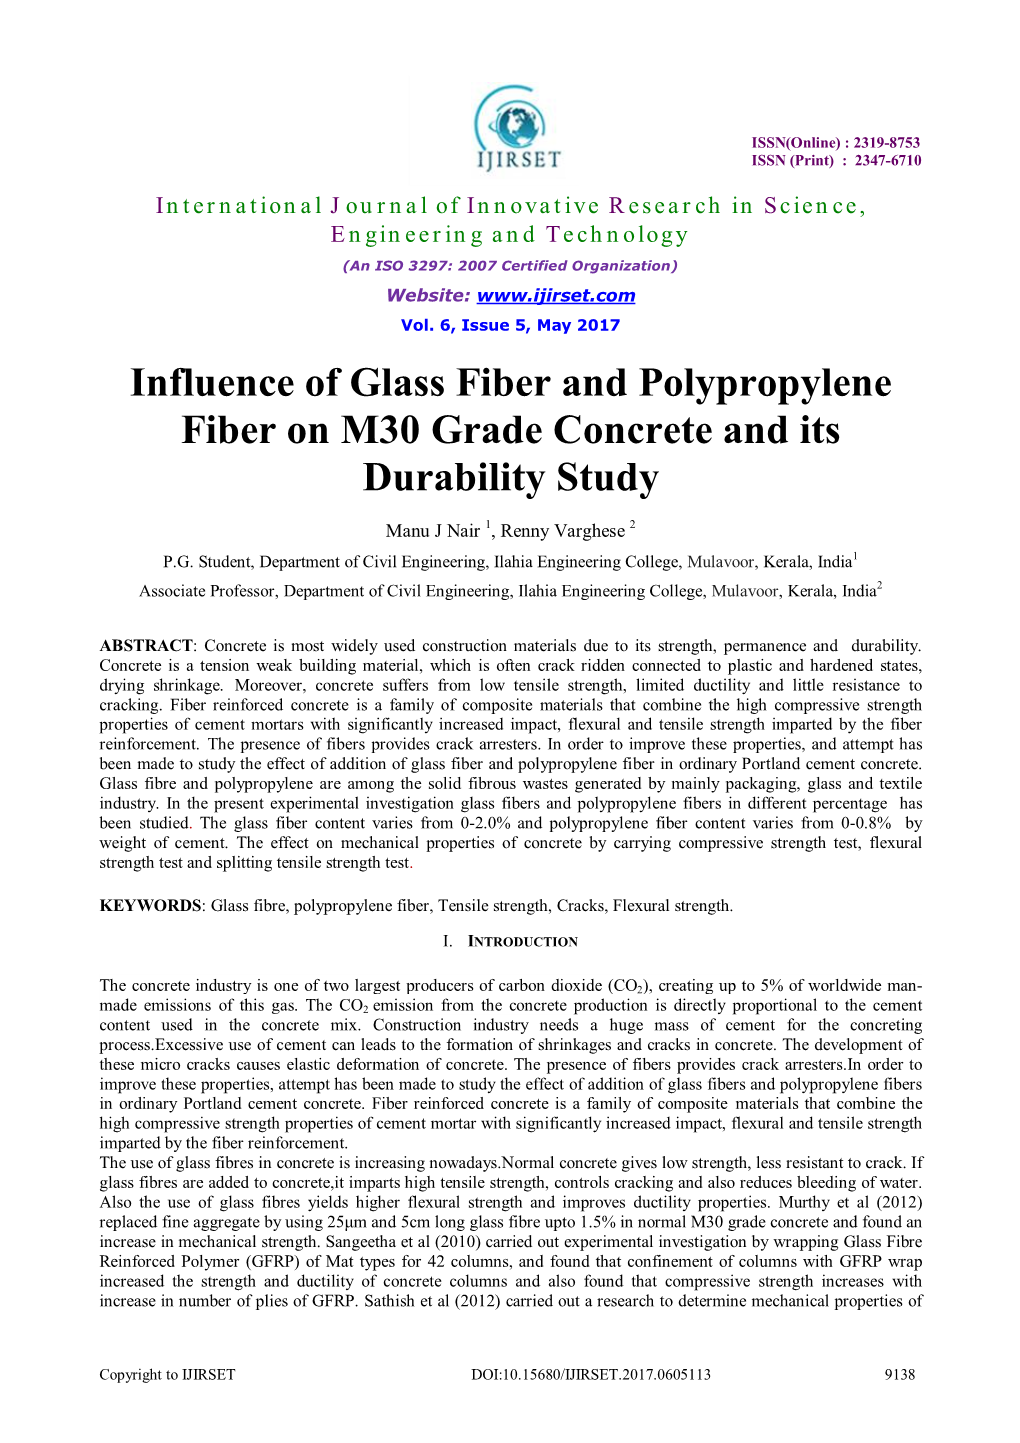 Influence of Glass Fiber and Polypropylene Fiber on M30 Grade Concrete and Its Durability Study